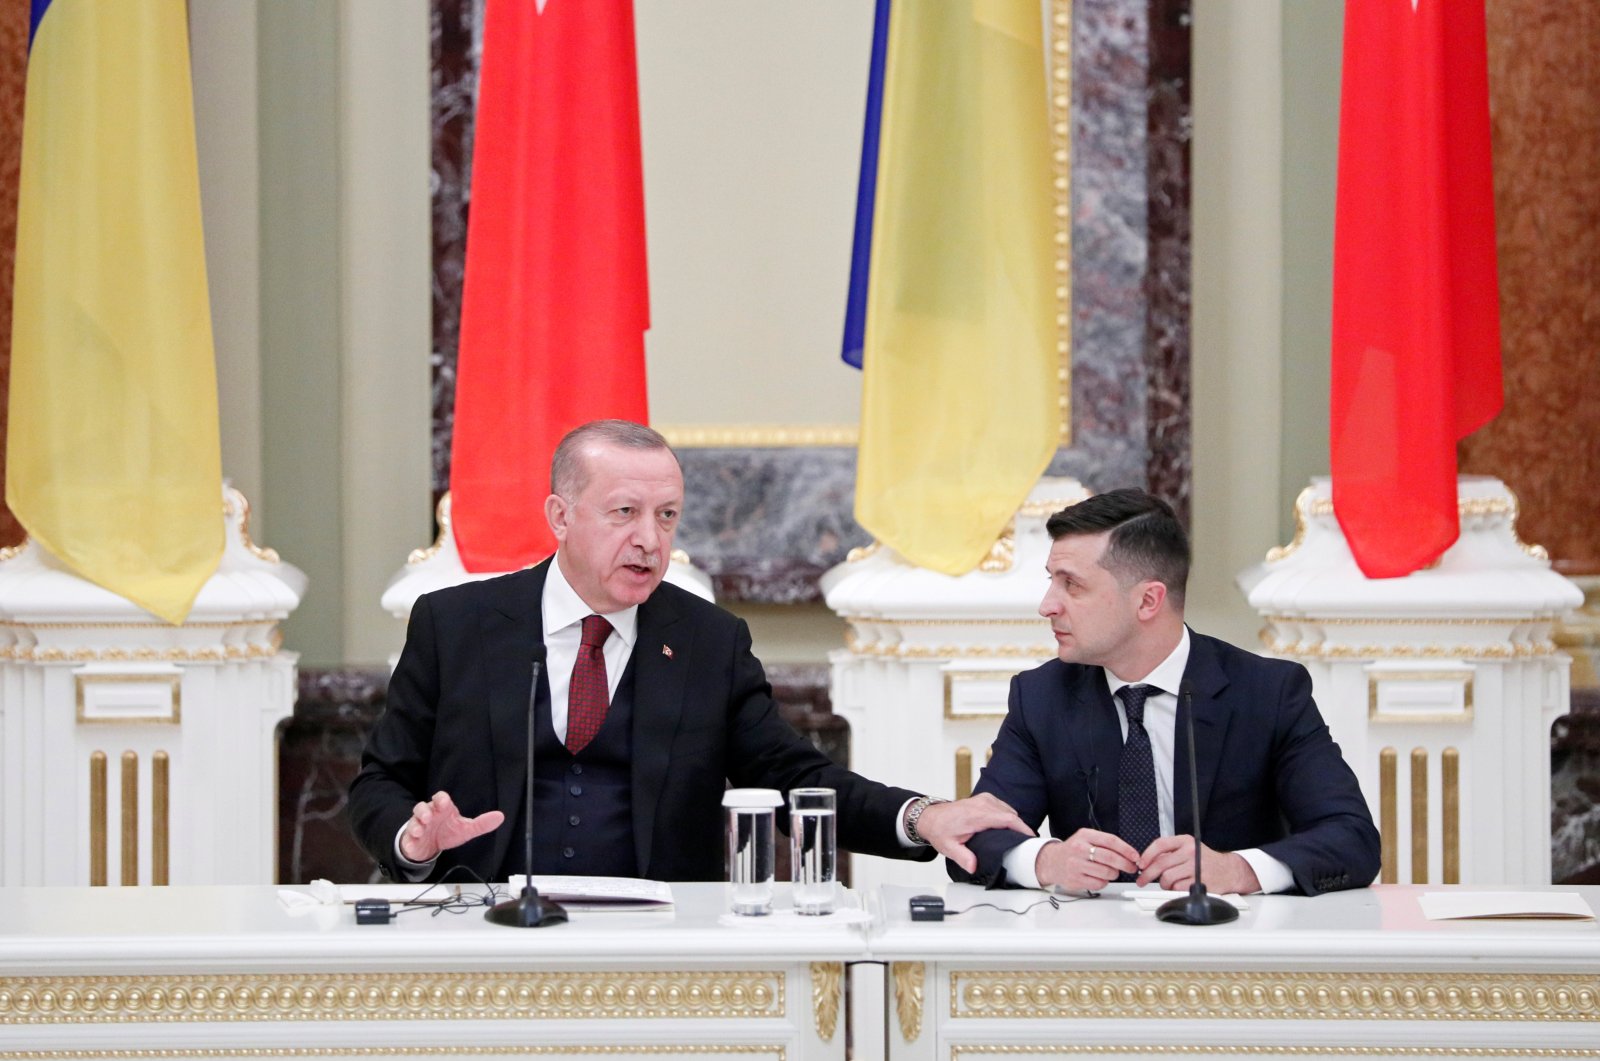 Erdoğan, Zelenskyy discuss peace efforts, food security